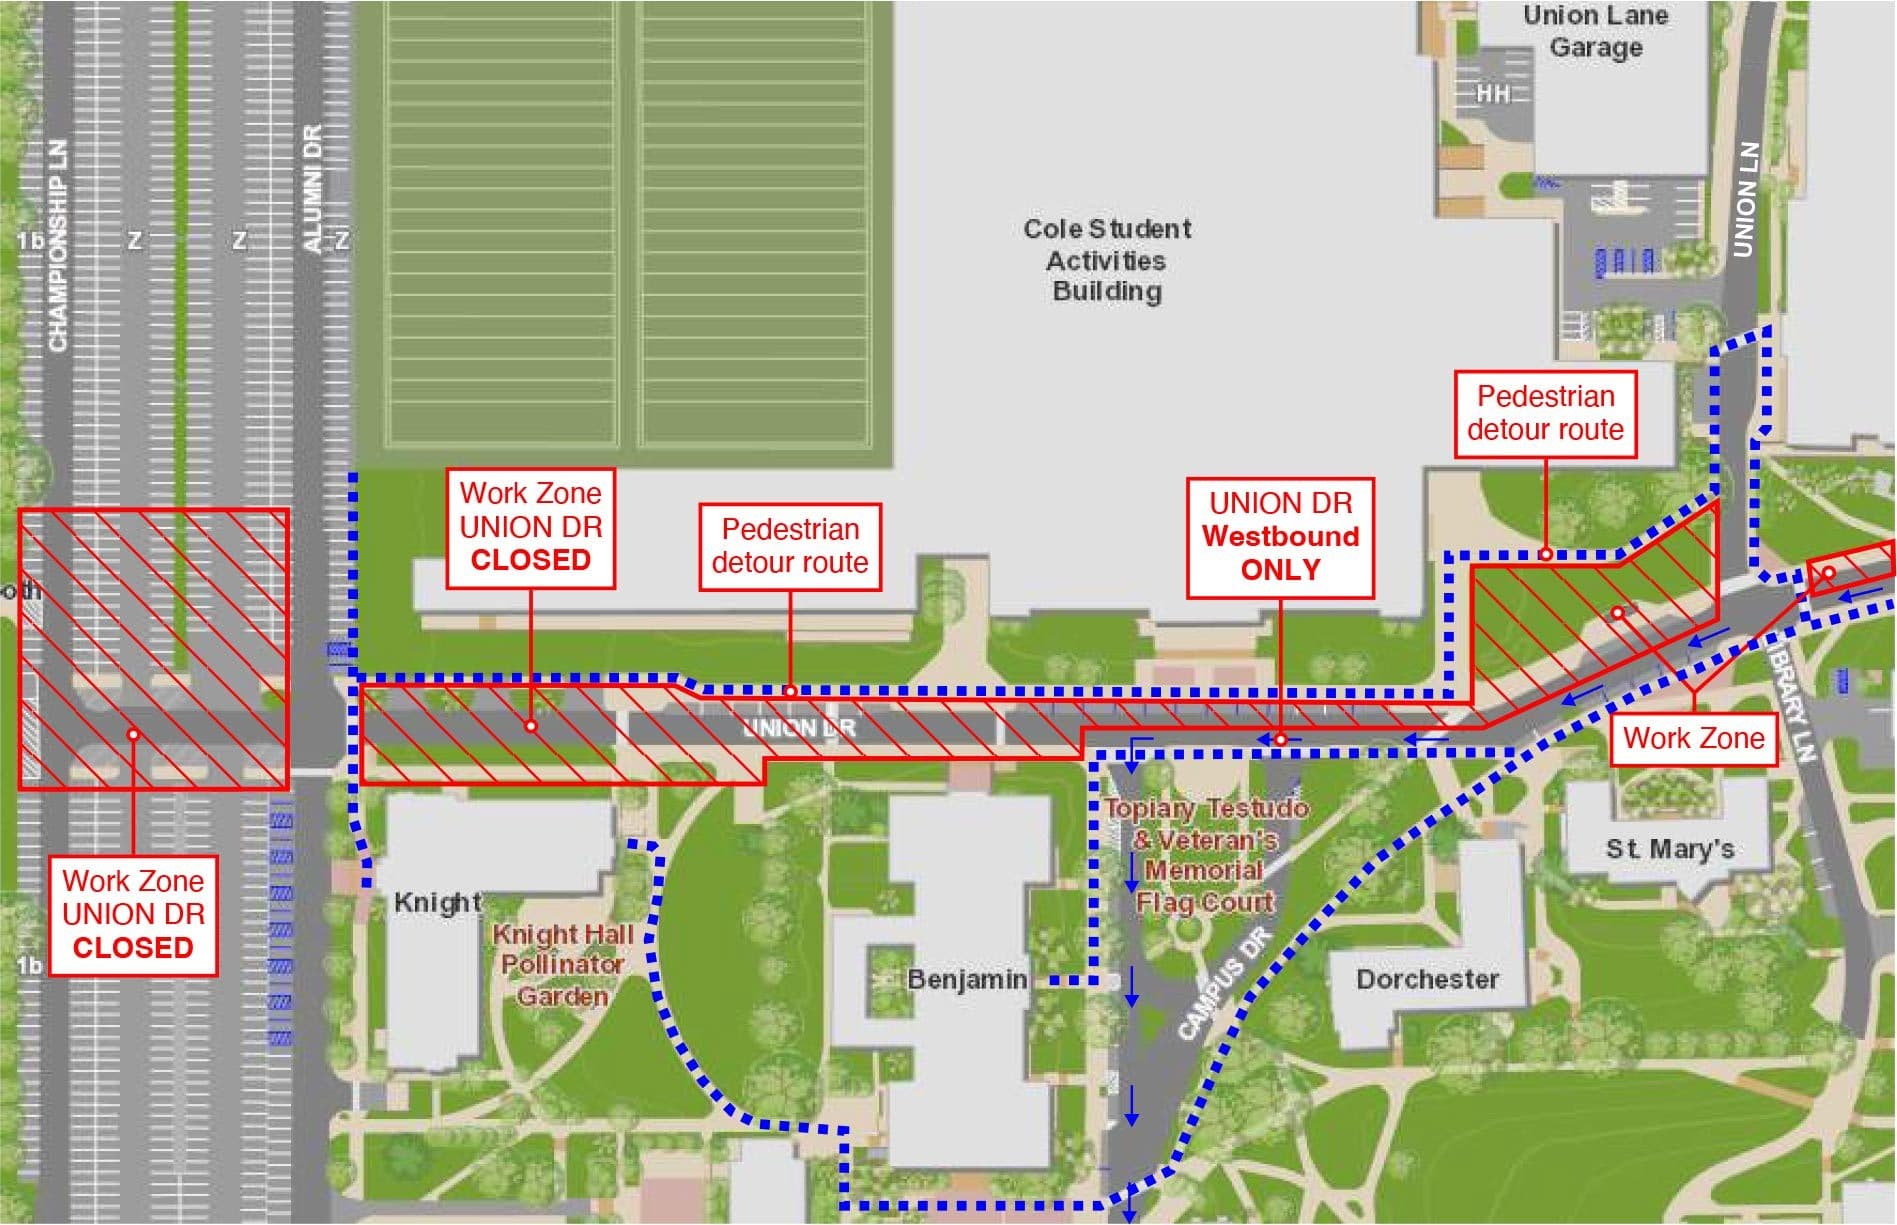 map showing Pedestrian detours along Union Drive near the Cole Student Activities Building